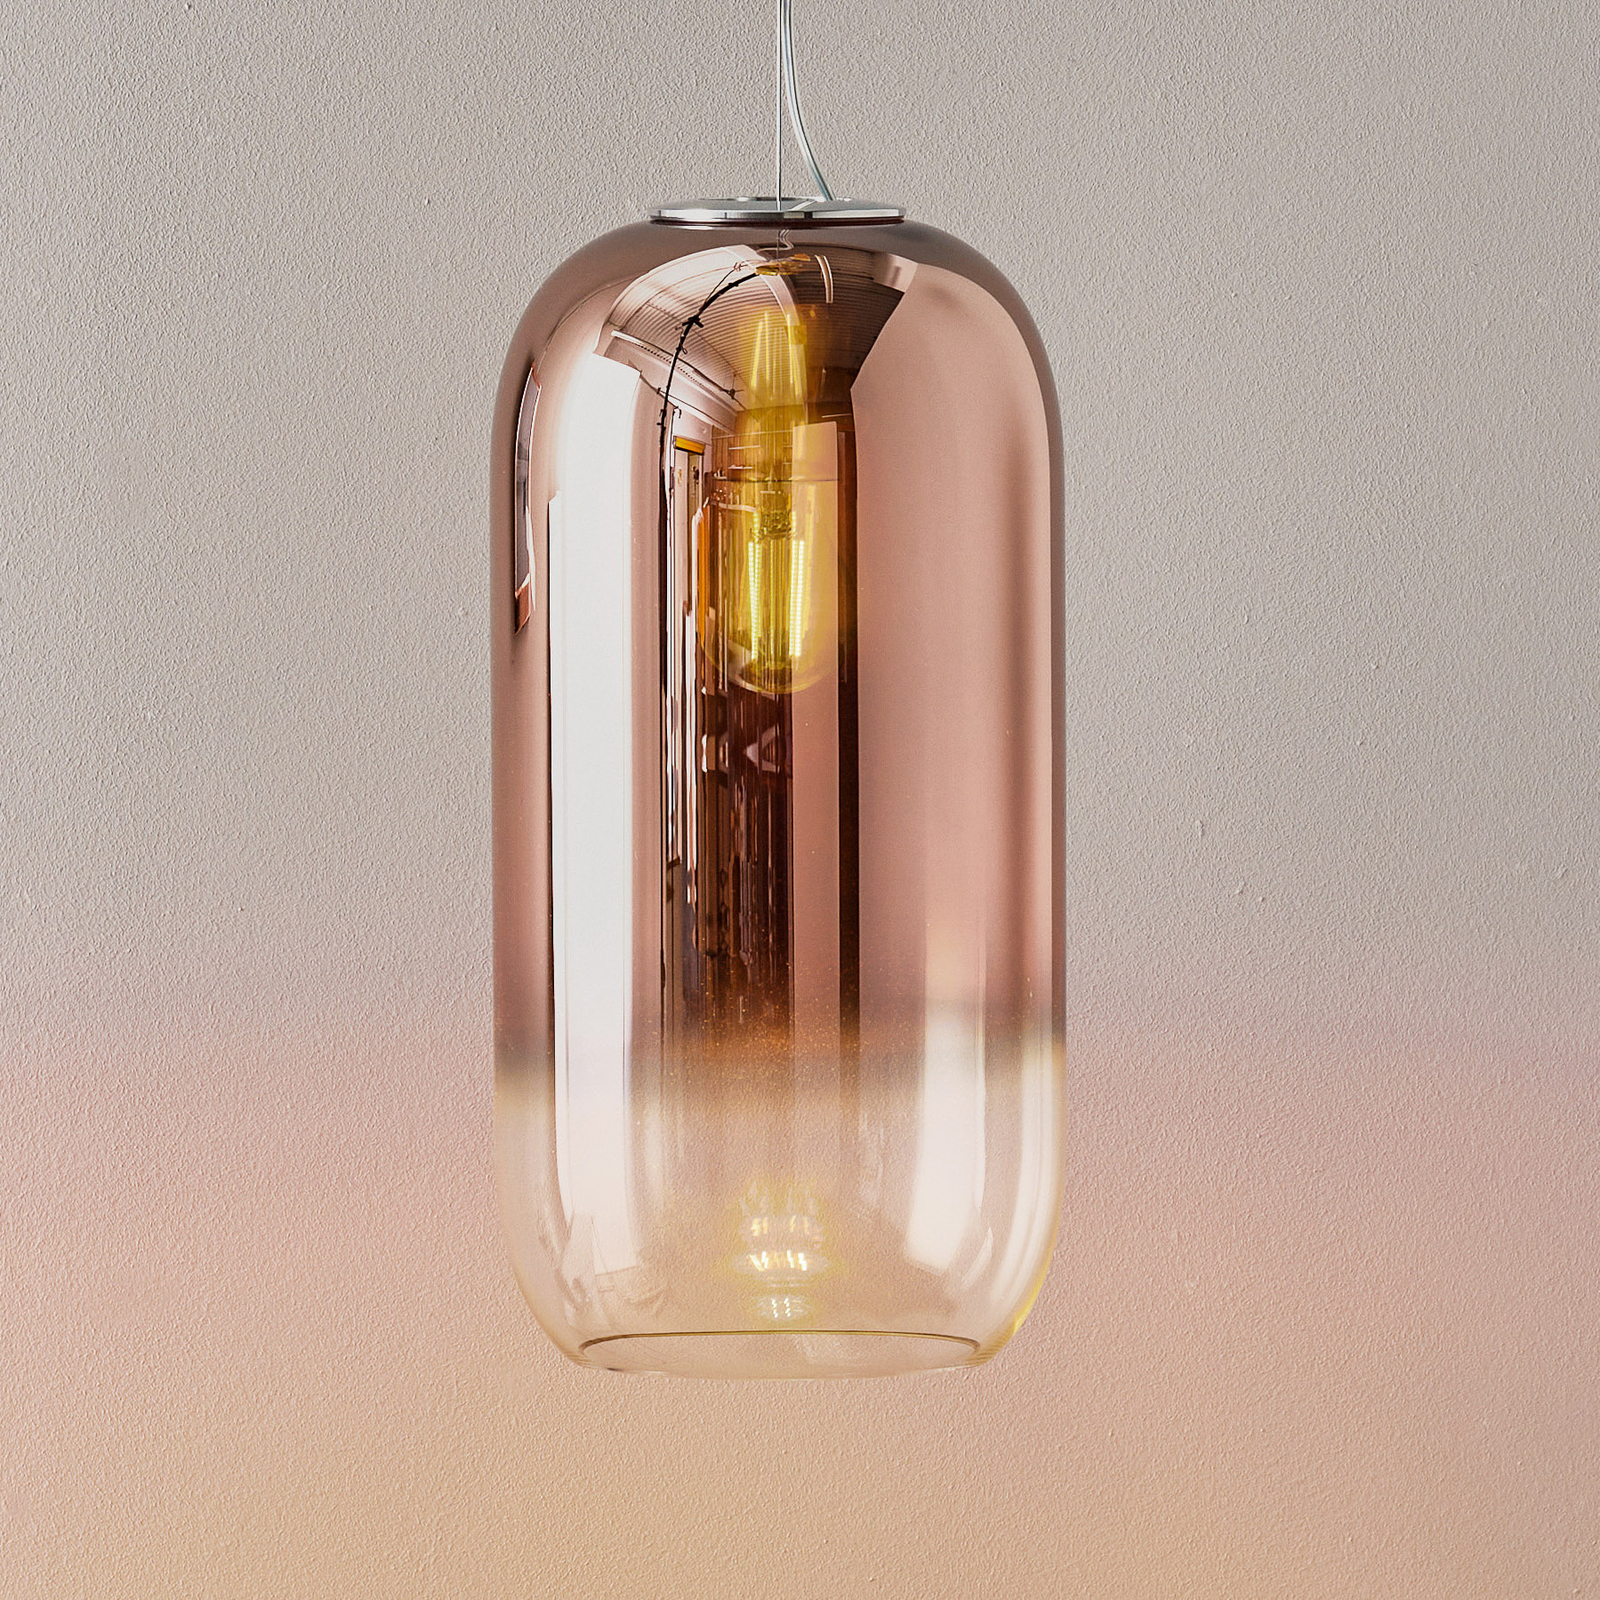 Artemide Gople glass pendant light, copper/silver